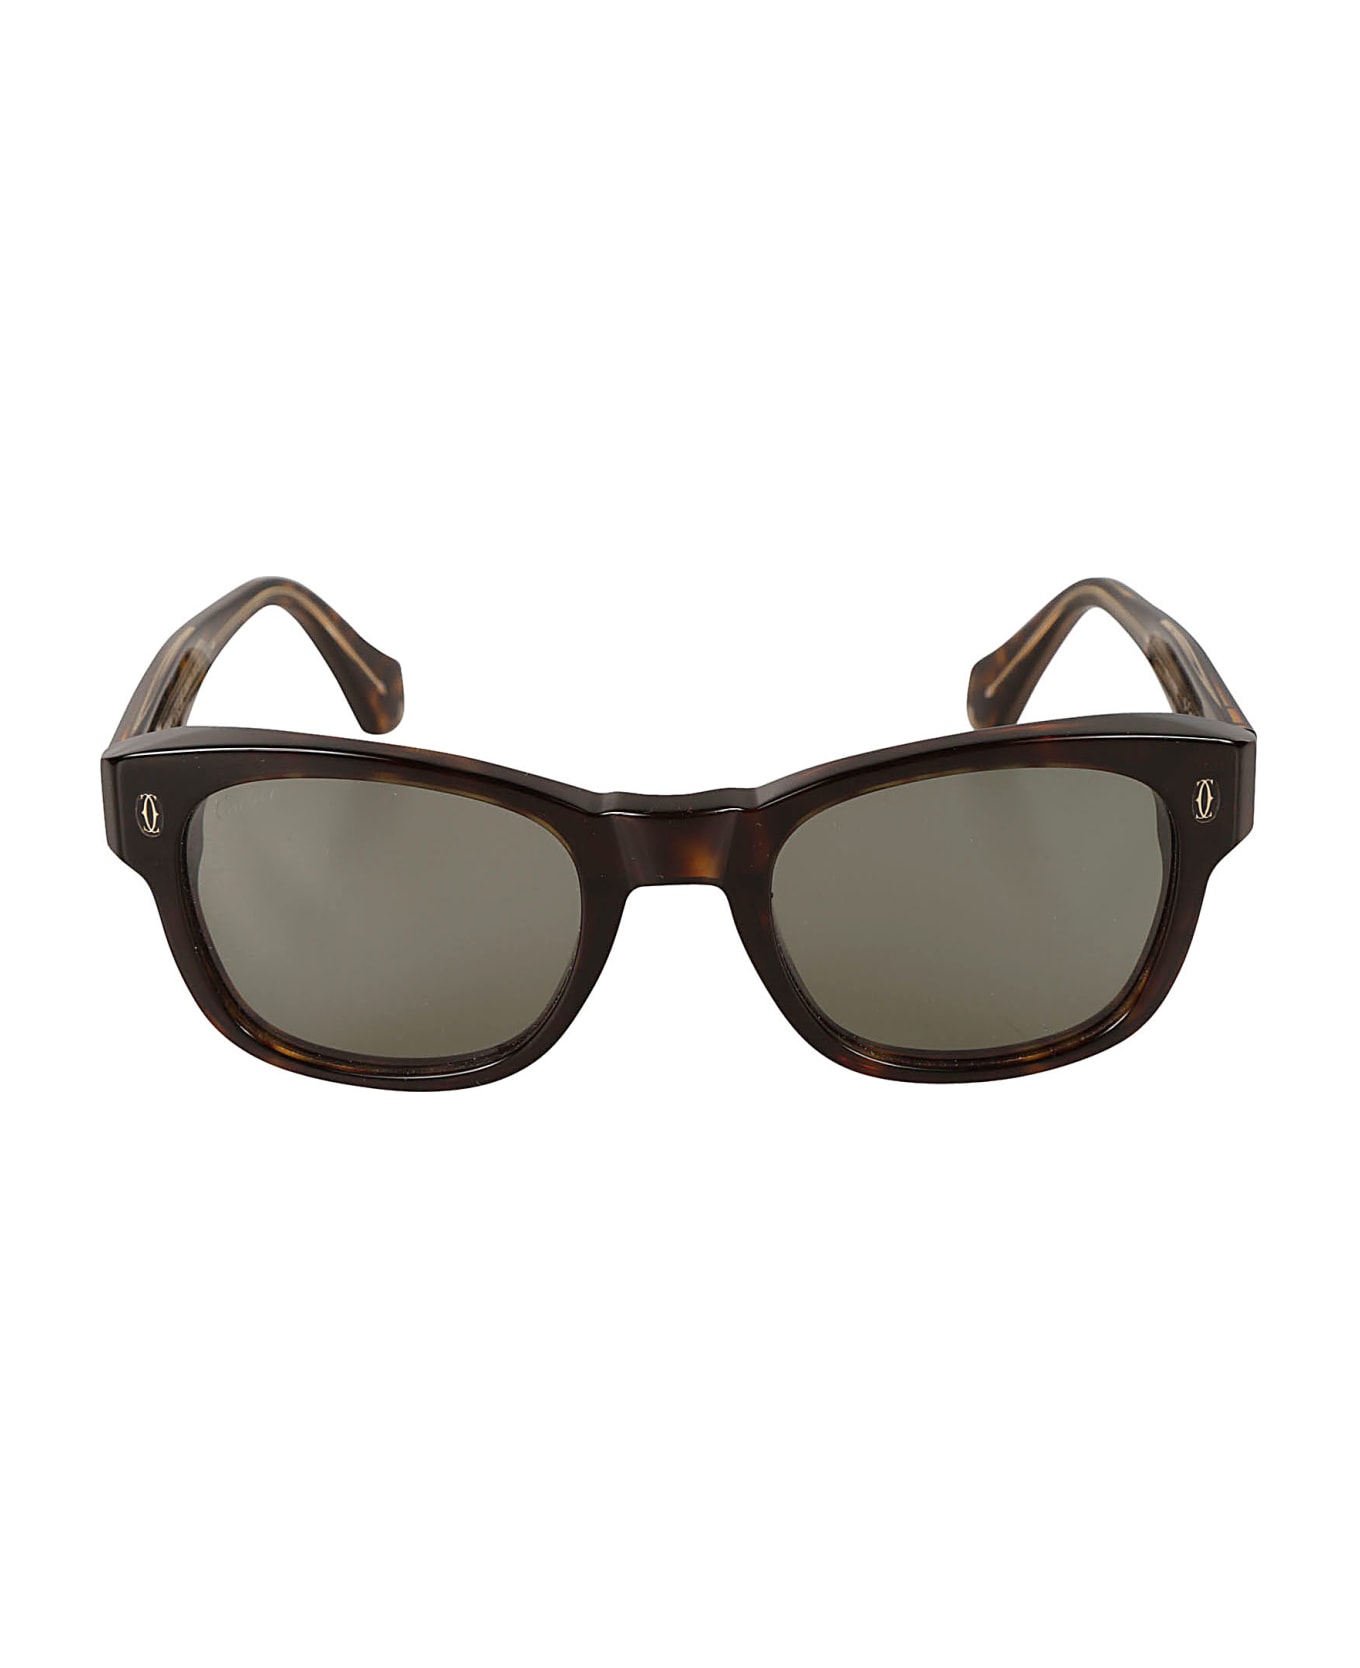 Cartier Eyewear Wayfarer Sunglasses Sunglasses - havana